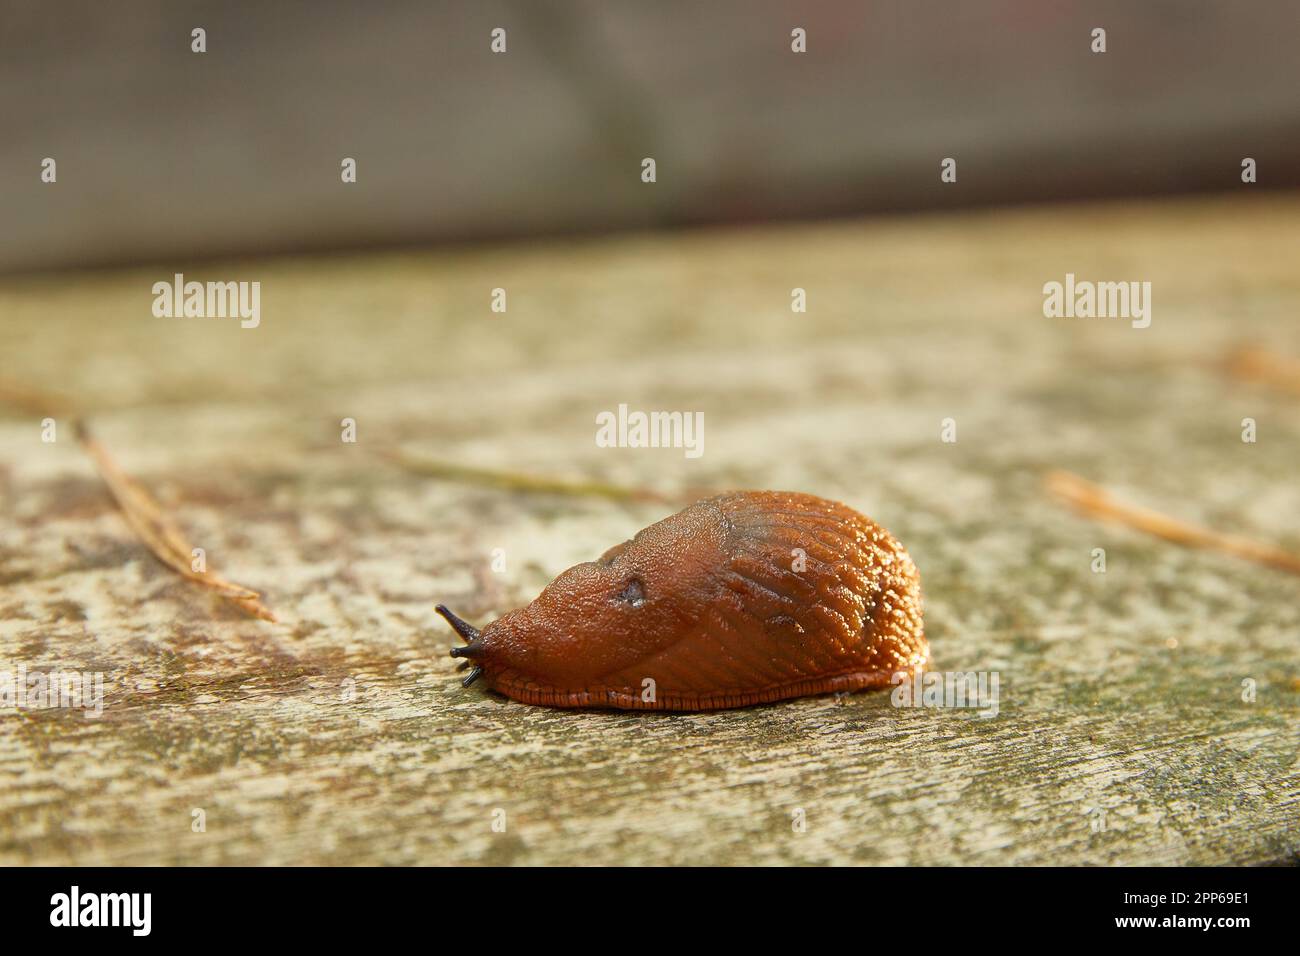 A large Spanish slug Arion vulgaris in its natural habitat Stock Photo